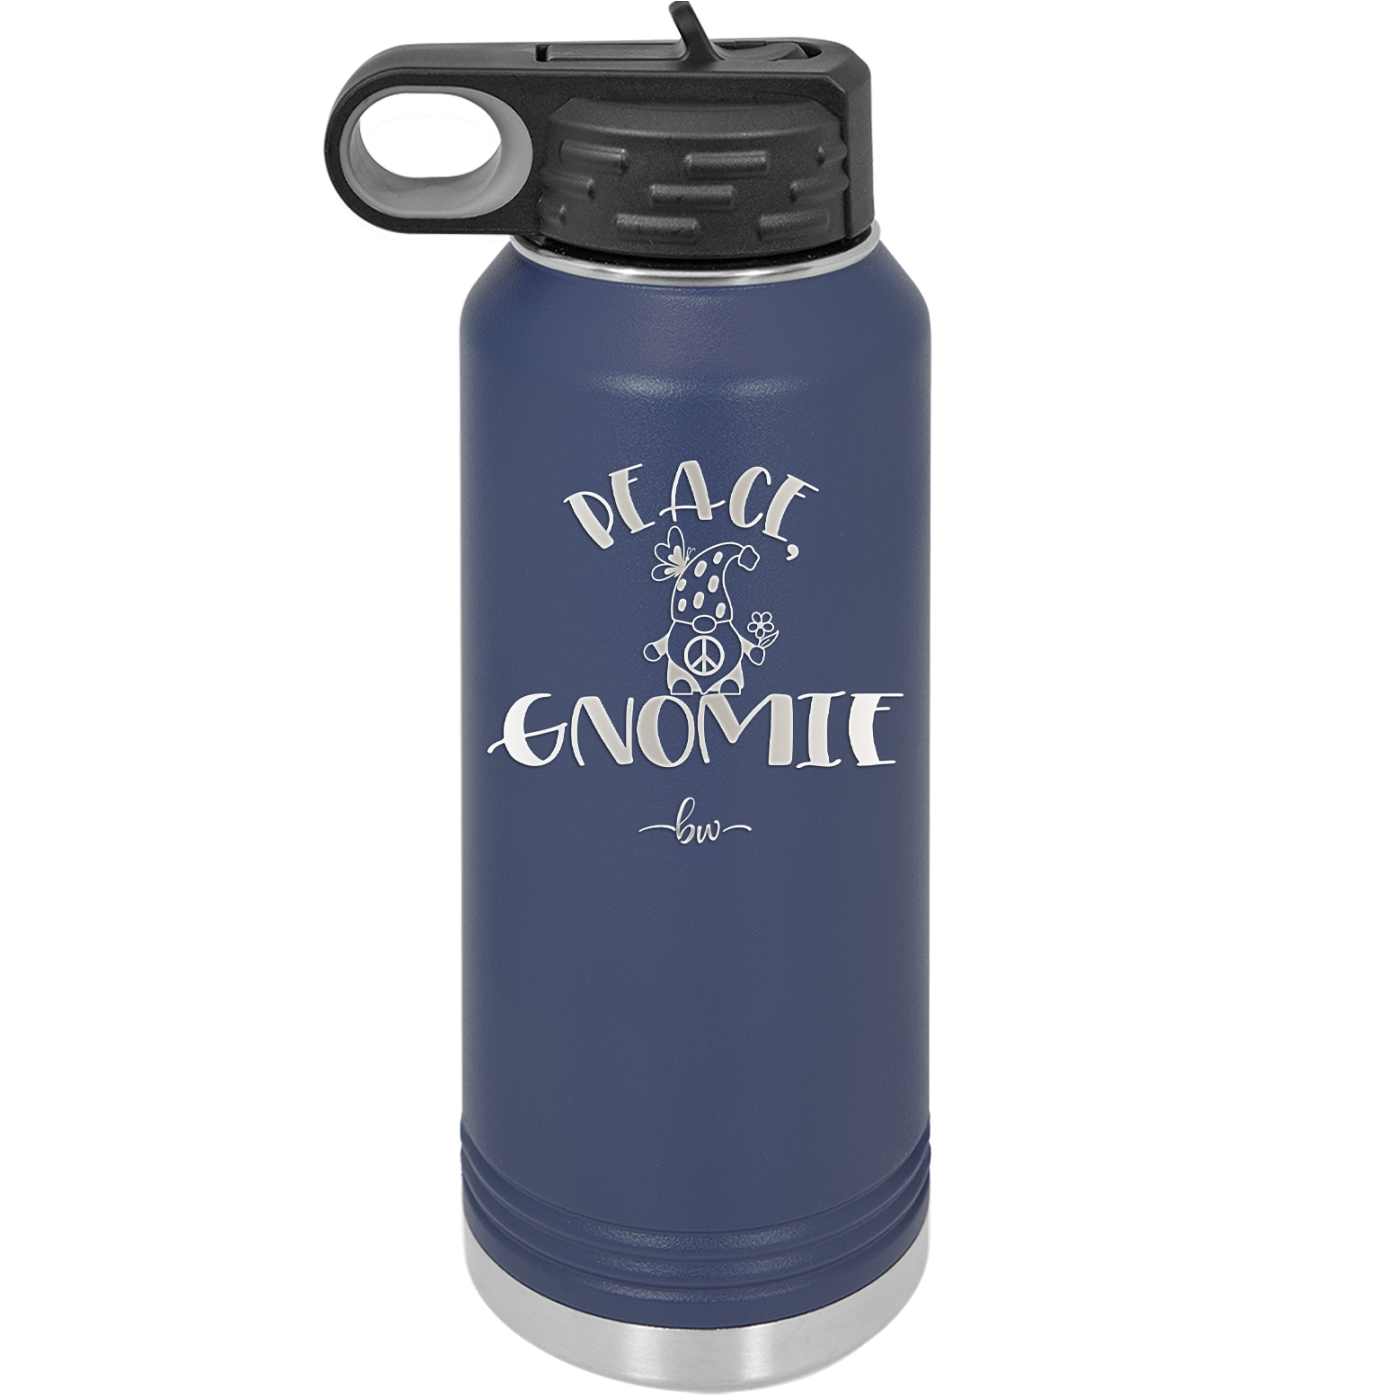 Peace Gnomie 1 - Laser Engraved Stainless Steel Drinkware - 2530 -